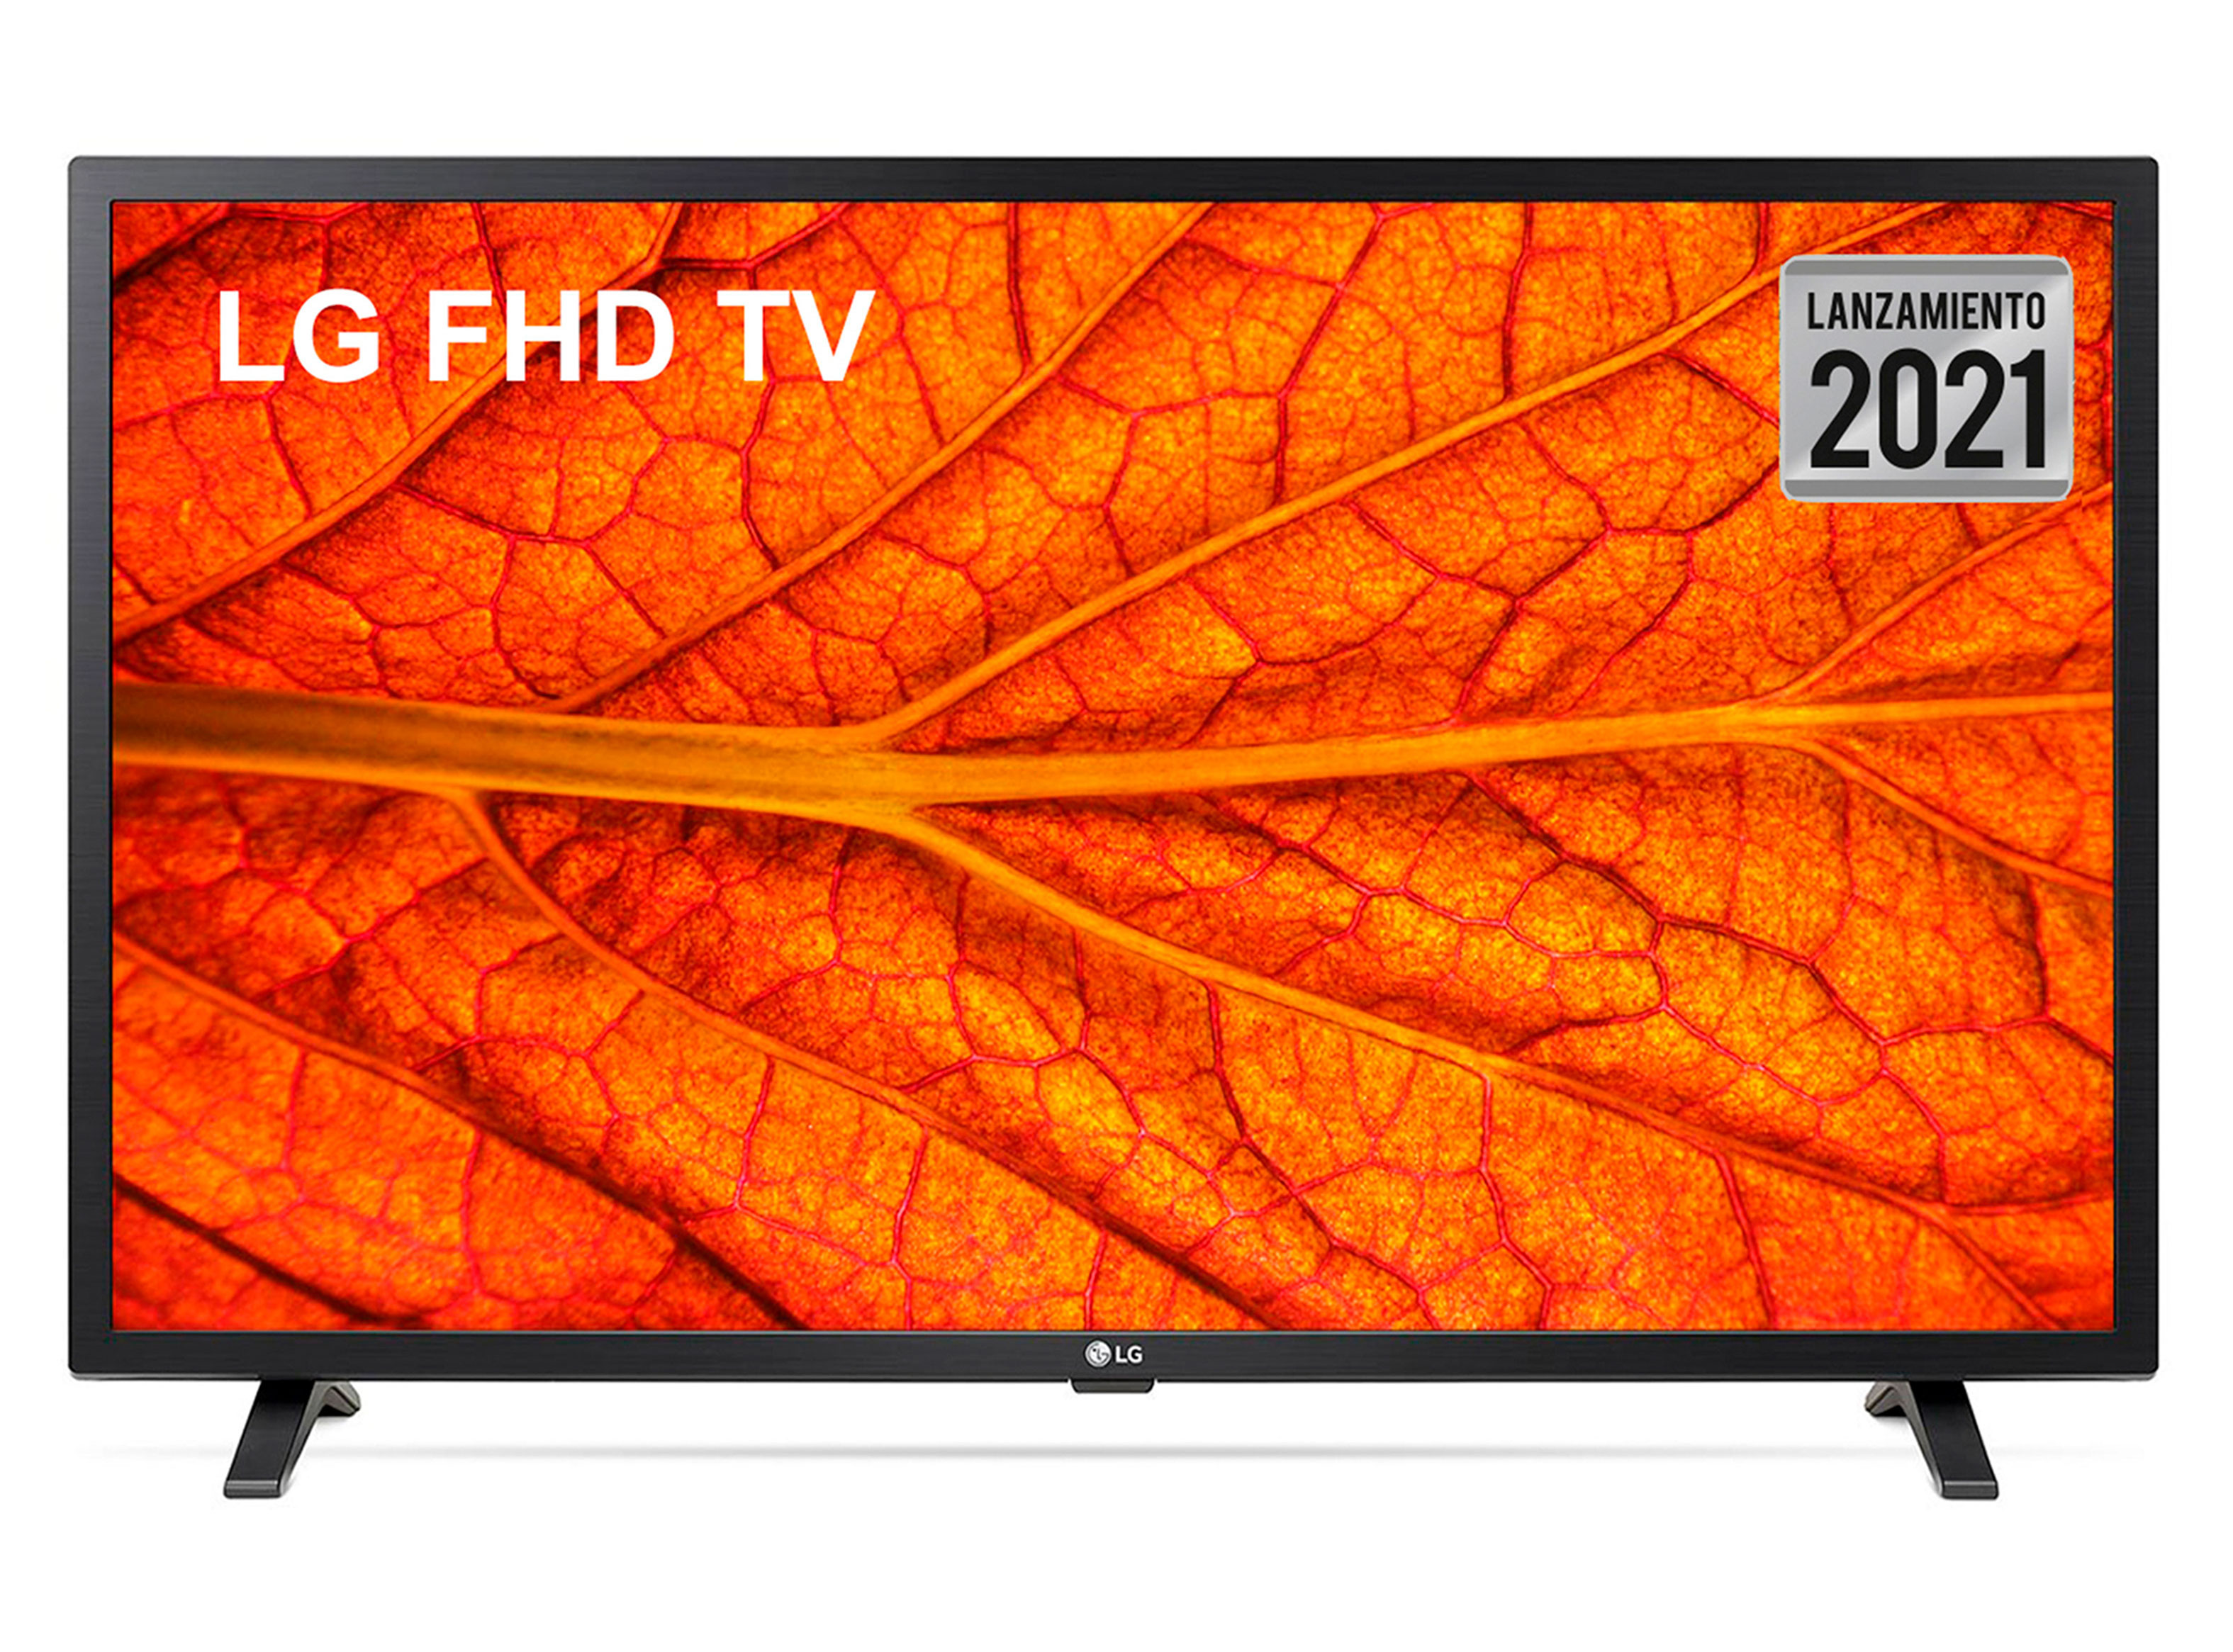 Pantalla LG 43 Pulgadas LED Full HD Smart TV a precio de socio